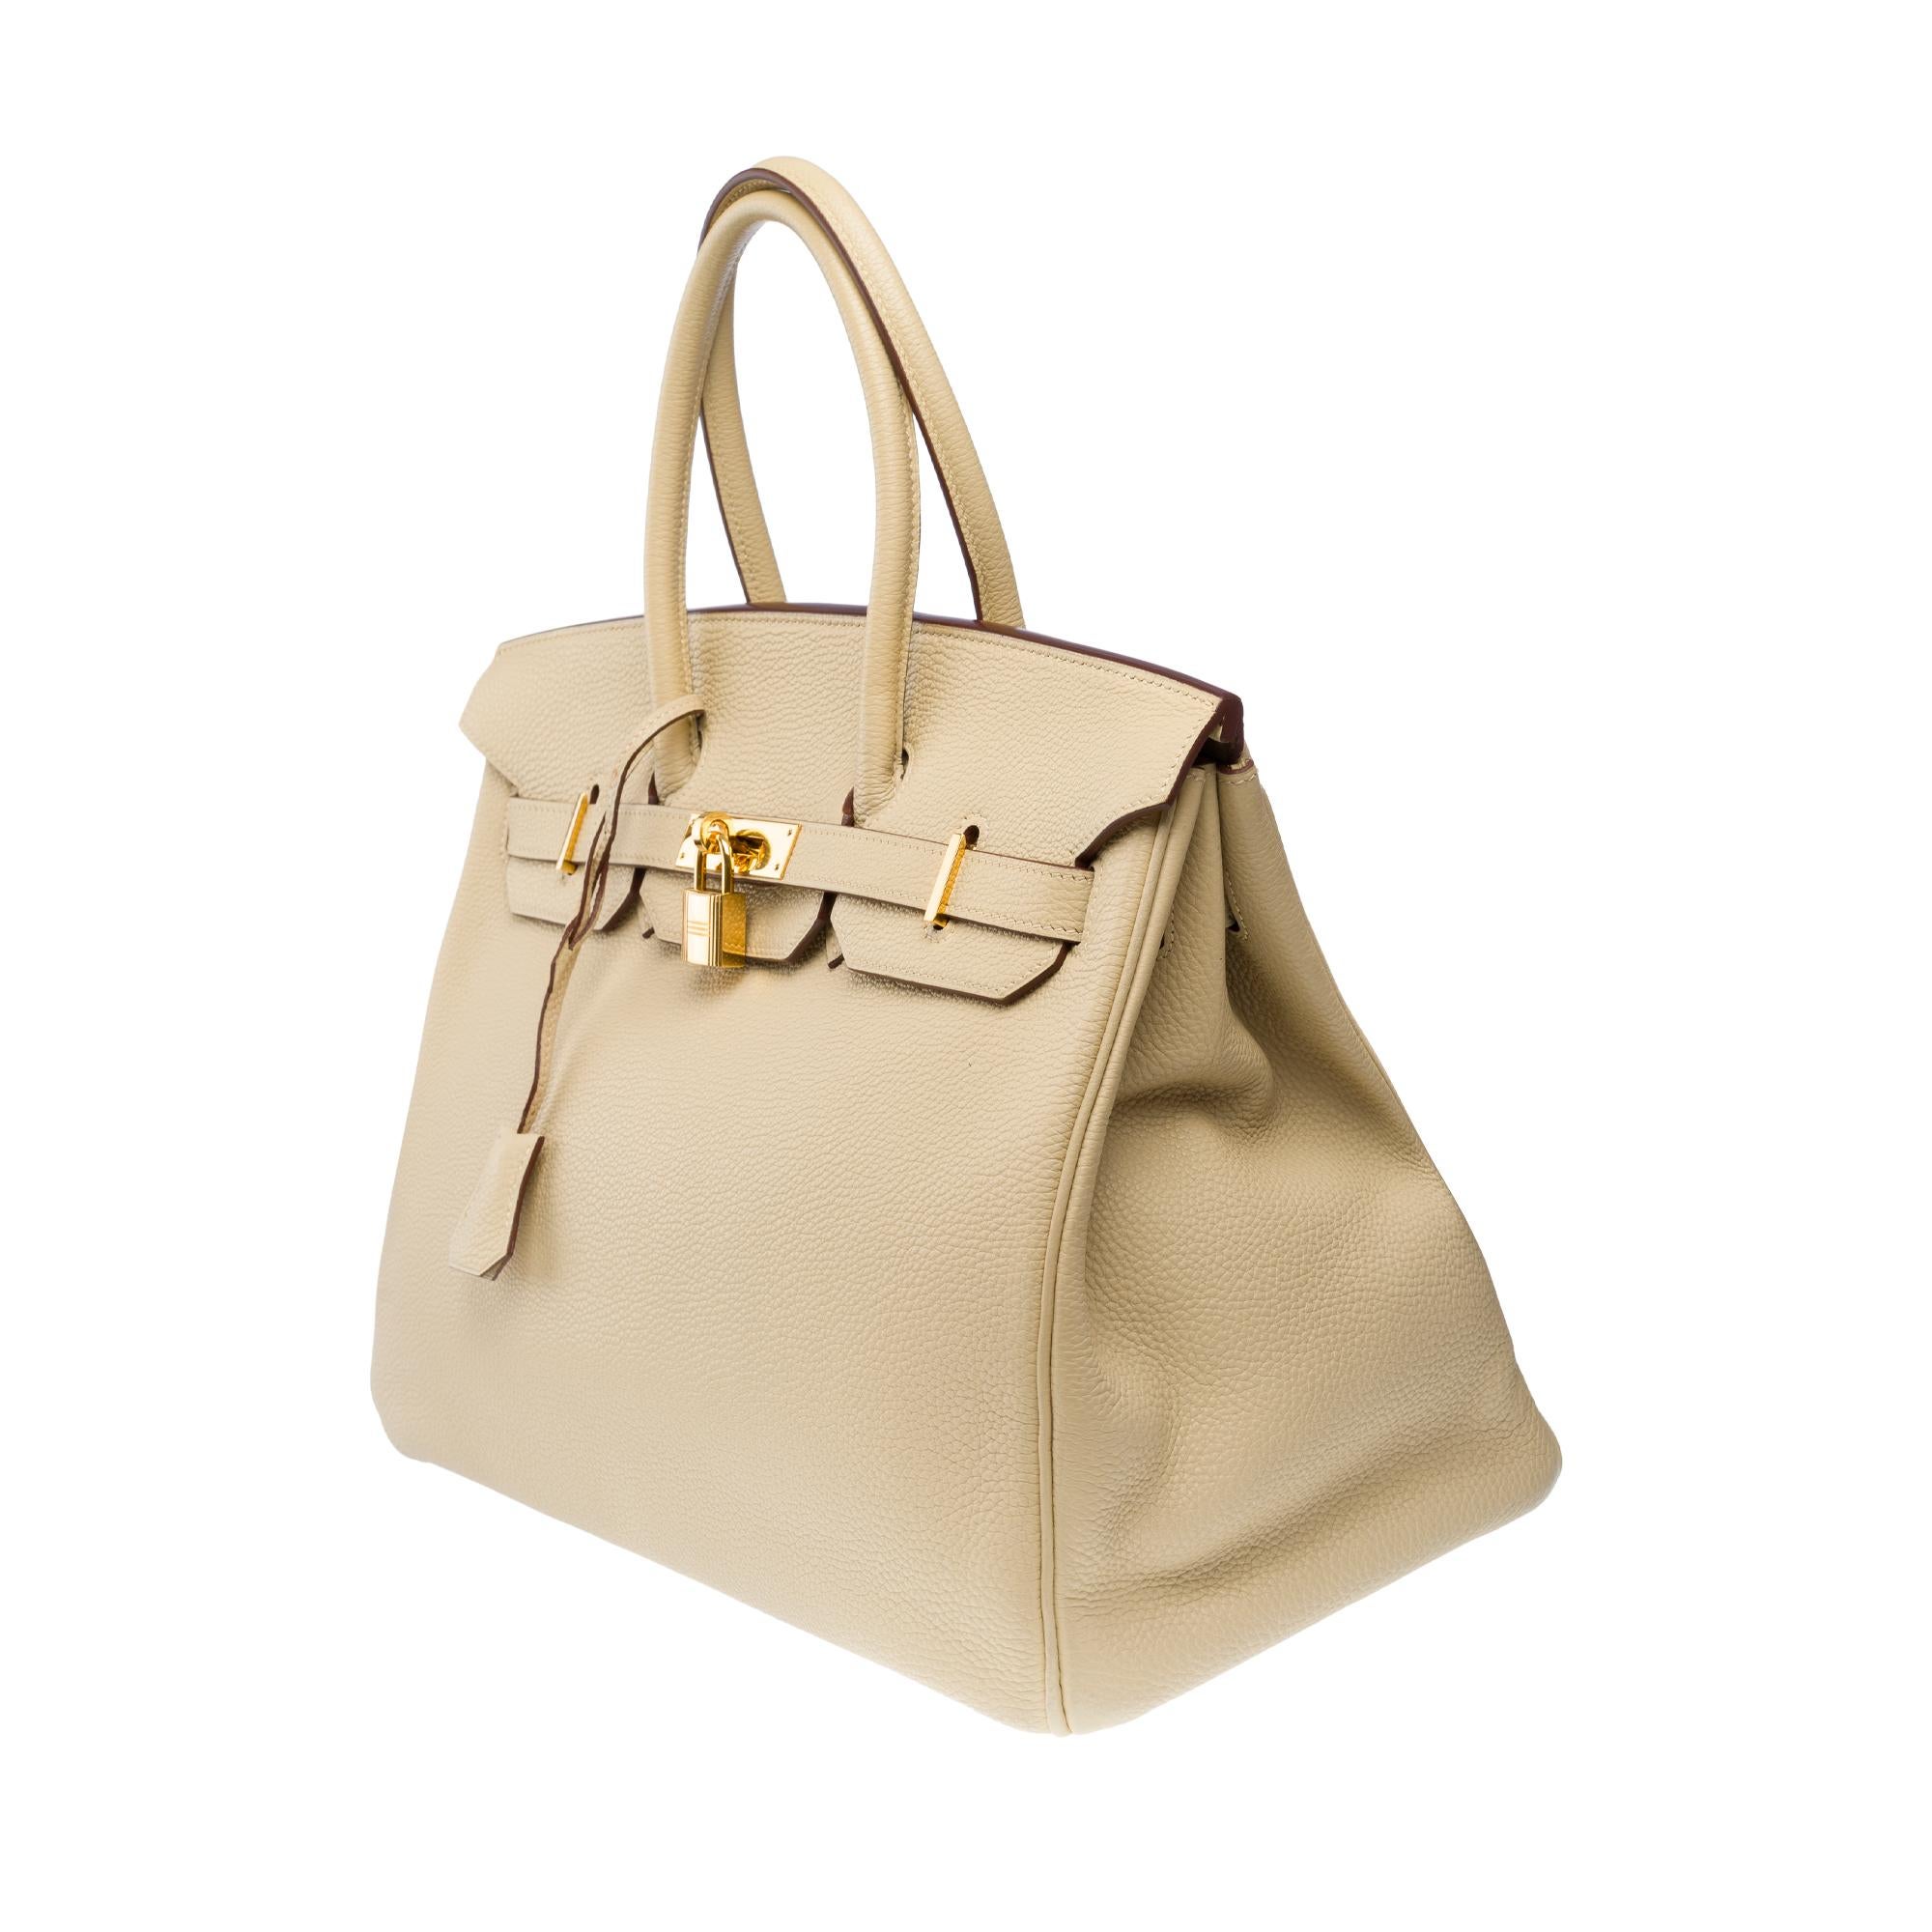 Amazing Hermès Birkin 35 handbag in Parchemin Togo leather, GHW 1